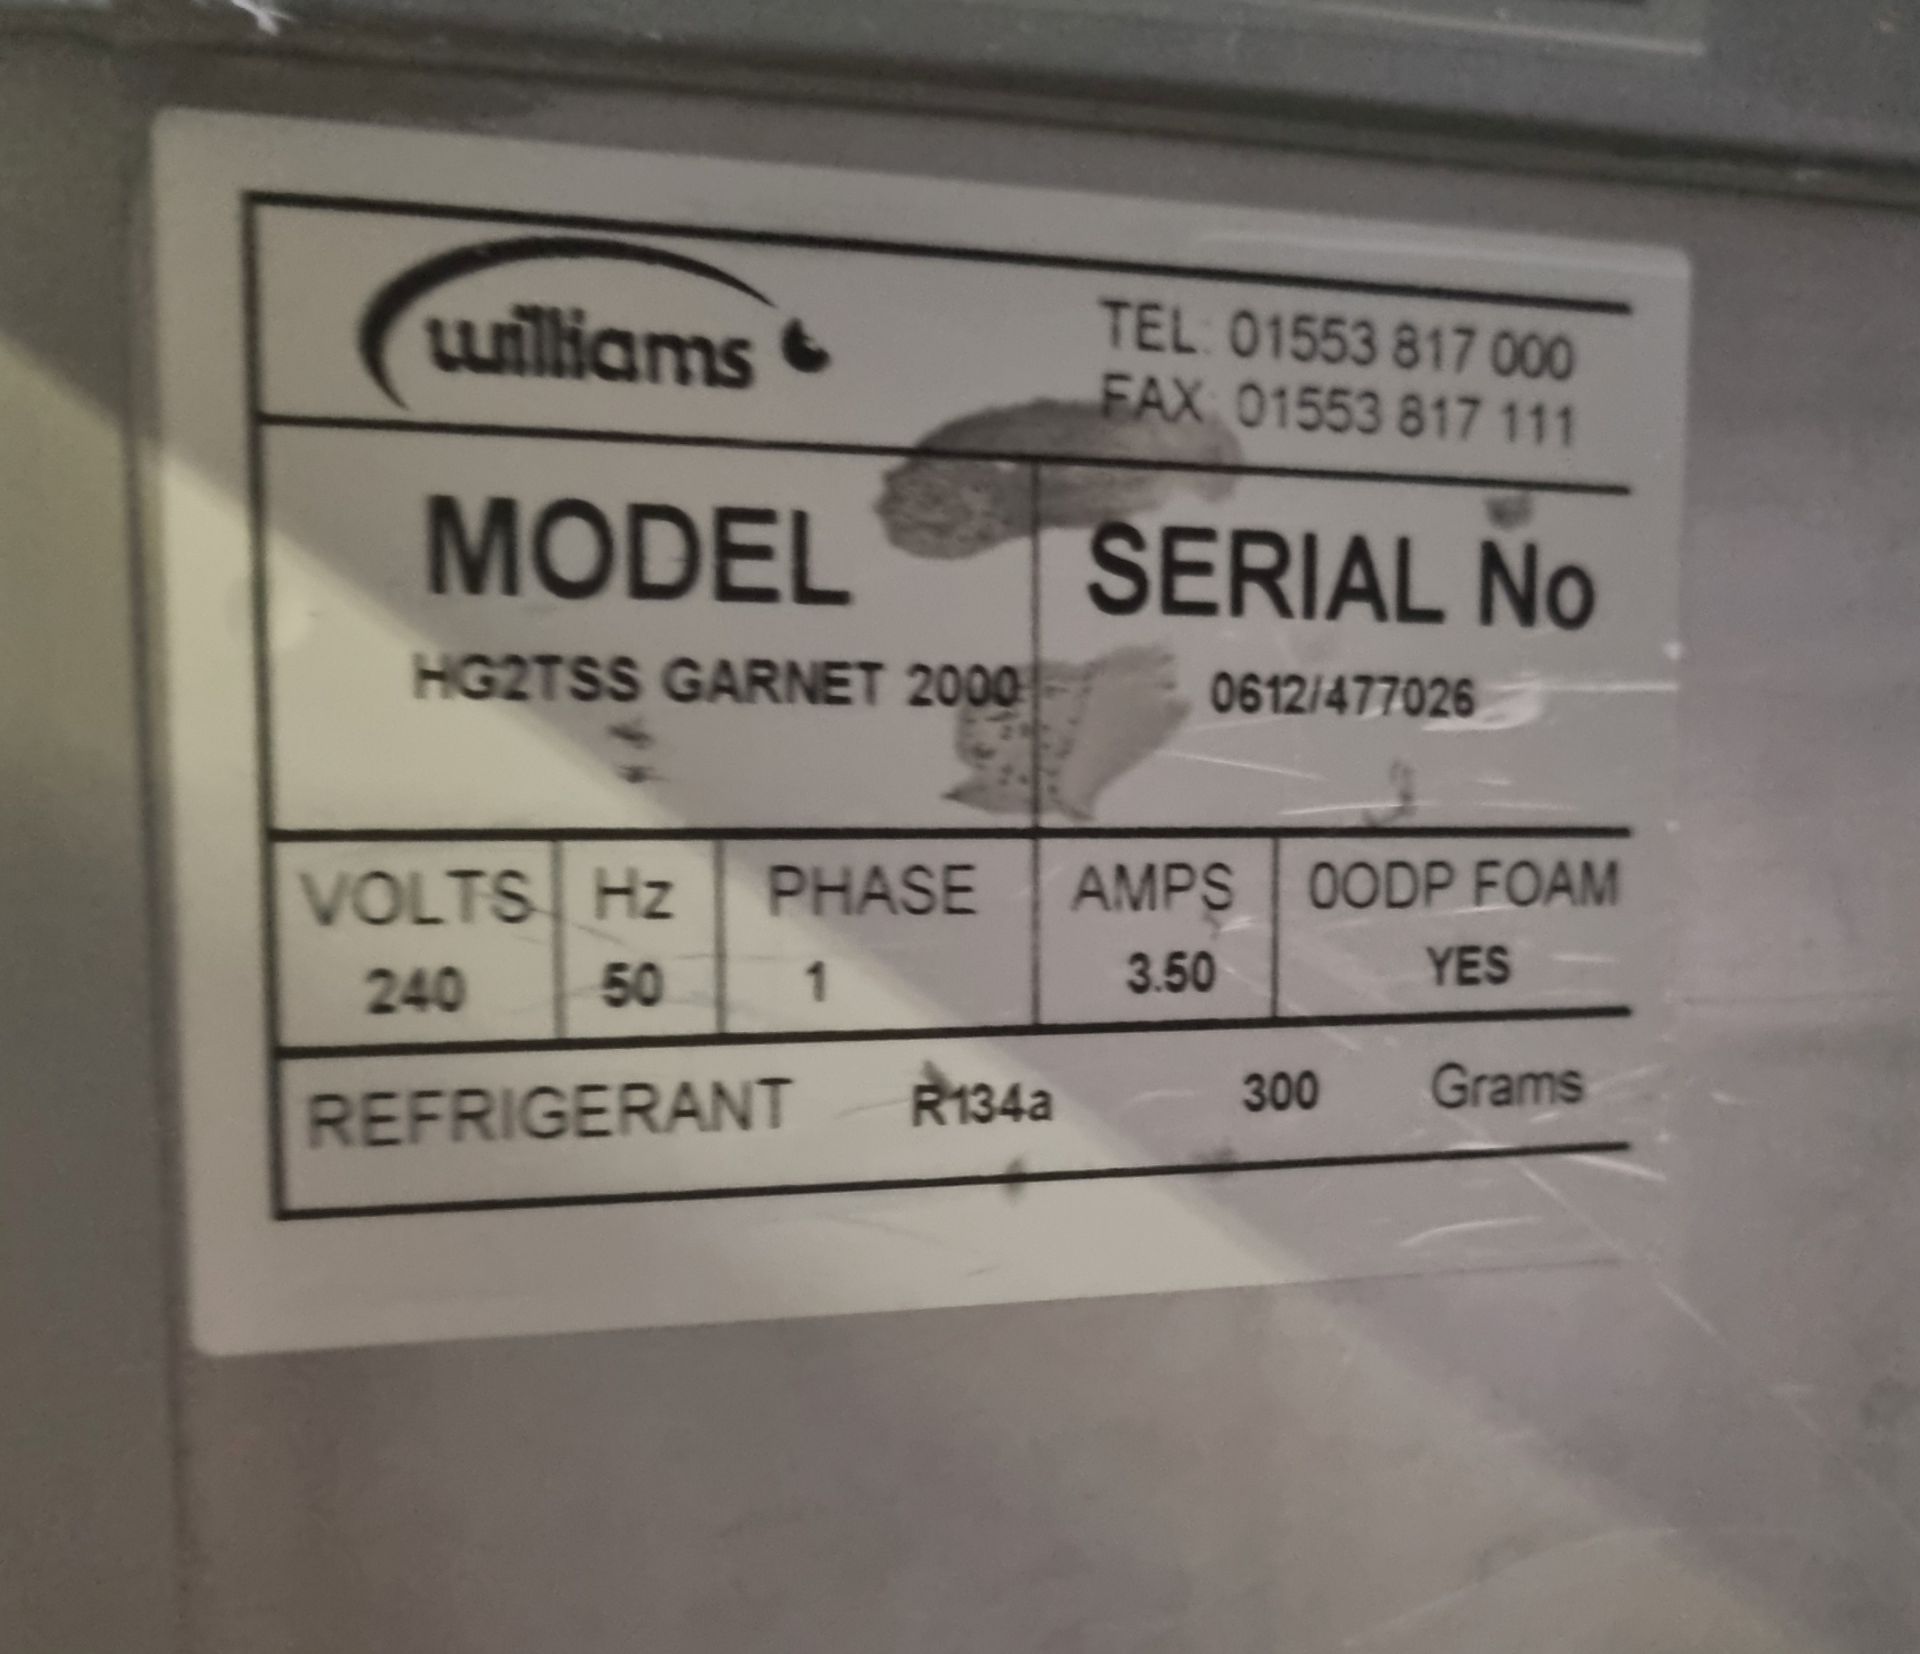 Williams HG2TSS Garent 2000 stainless steel double door upright fridge - W 1400 x D 830 x H 1970mm - Image 4 of 6